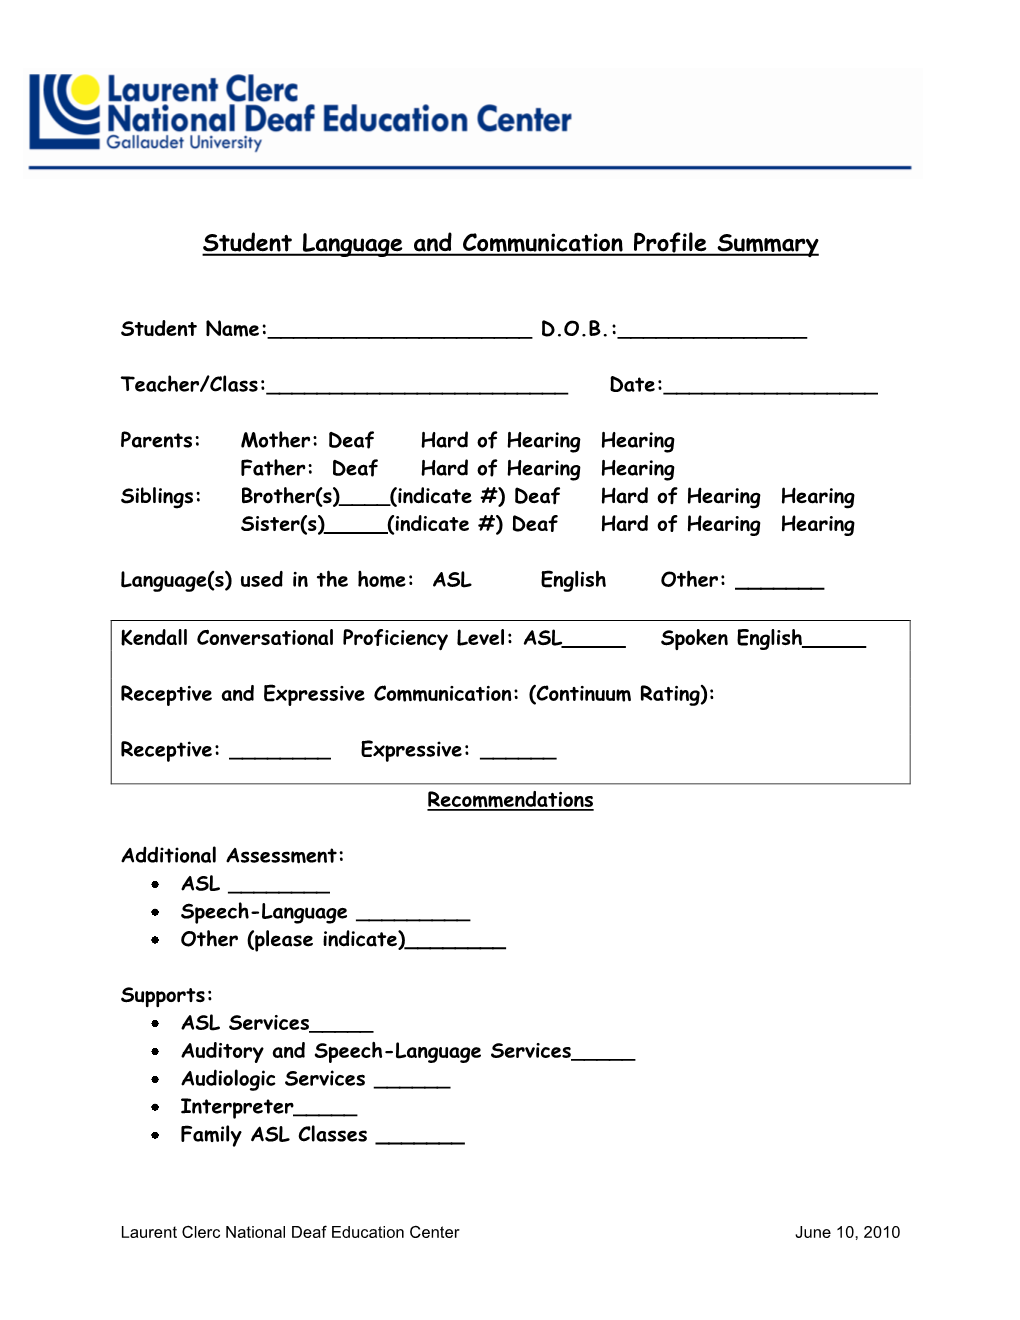 Student Language and Communication Profile Summary